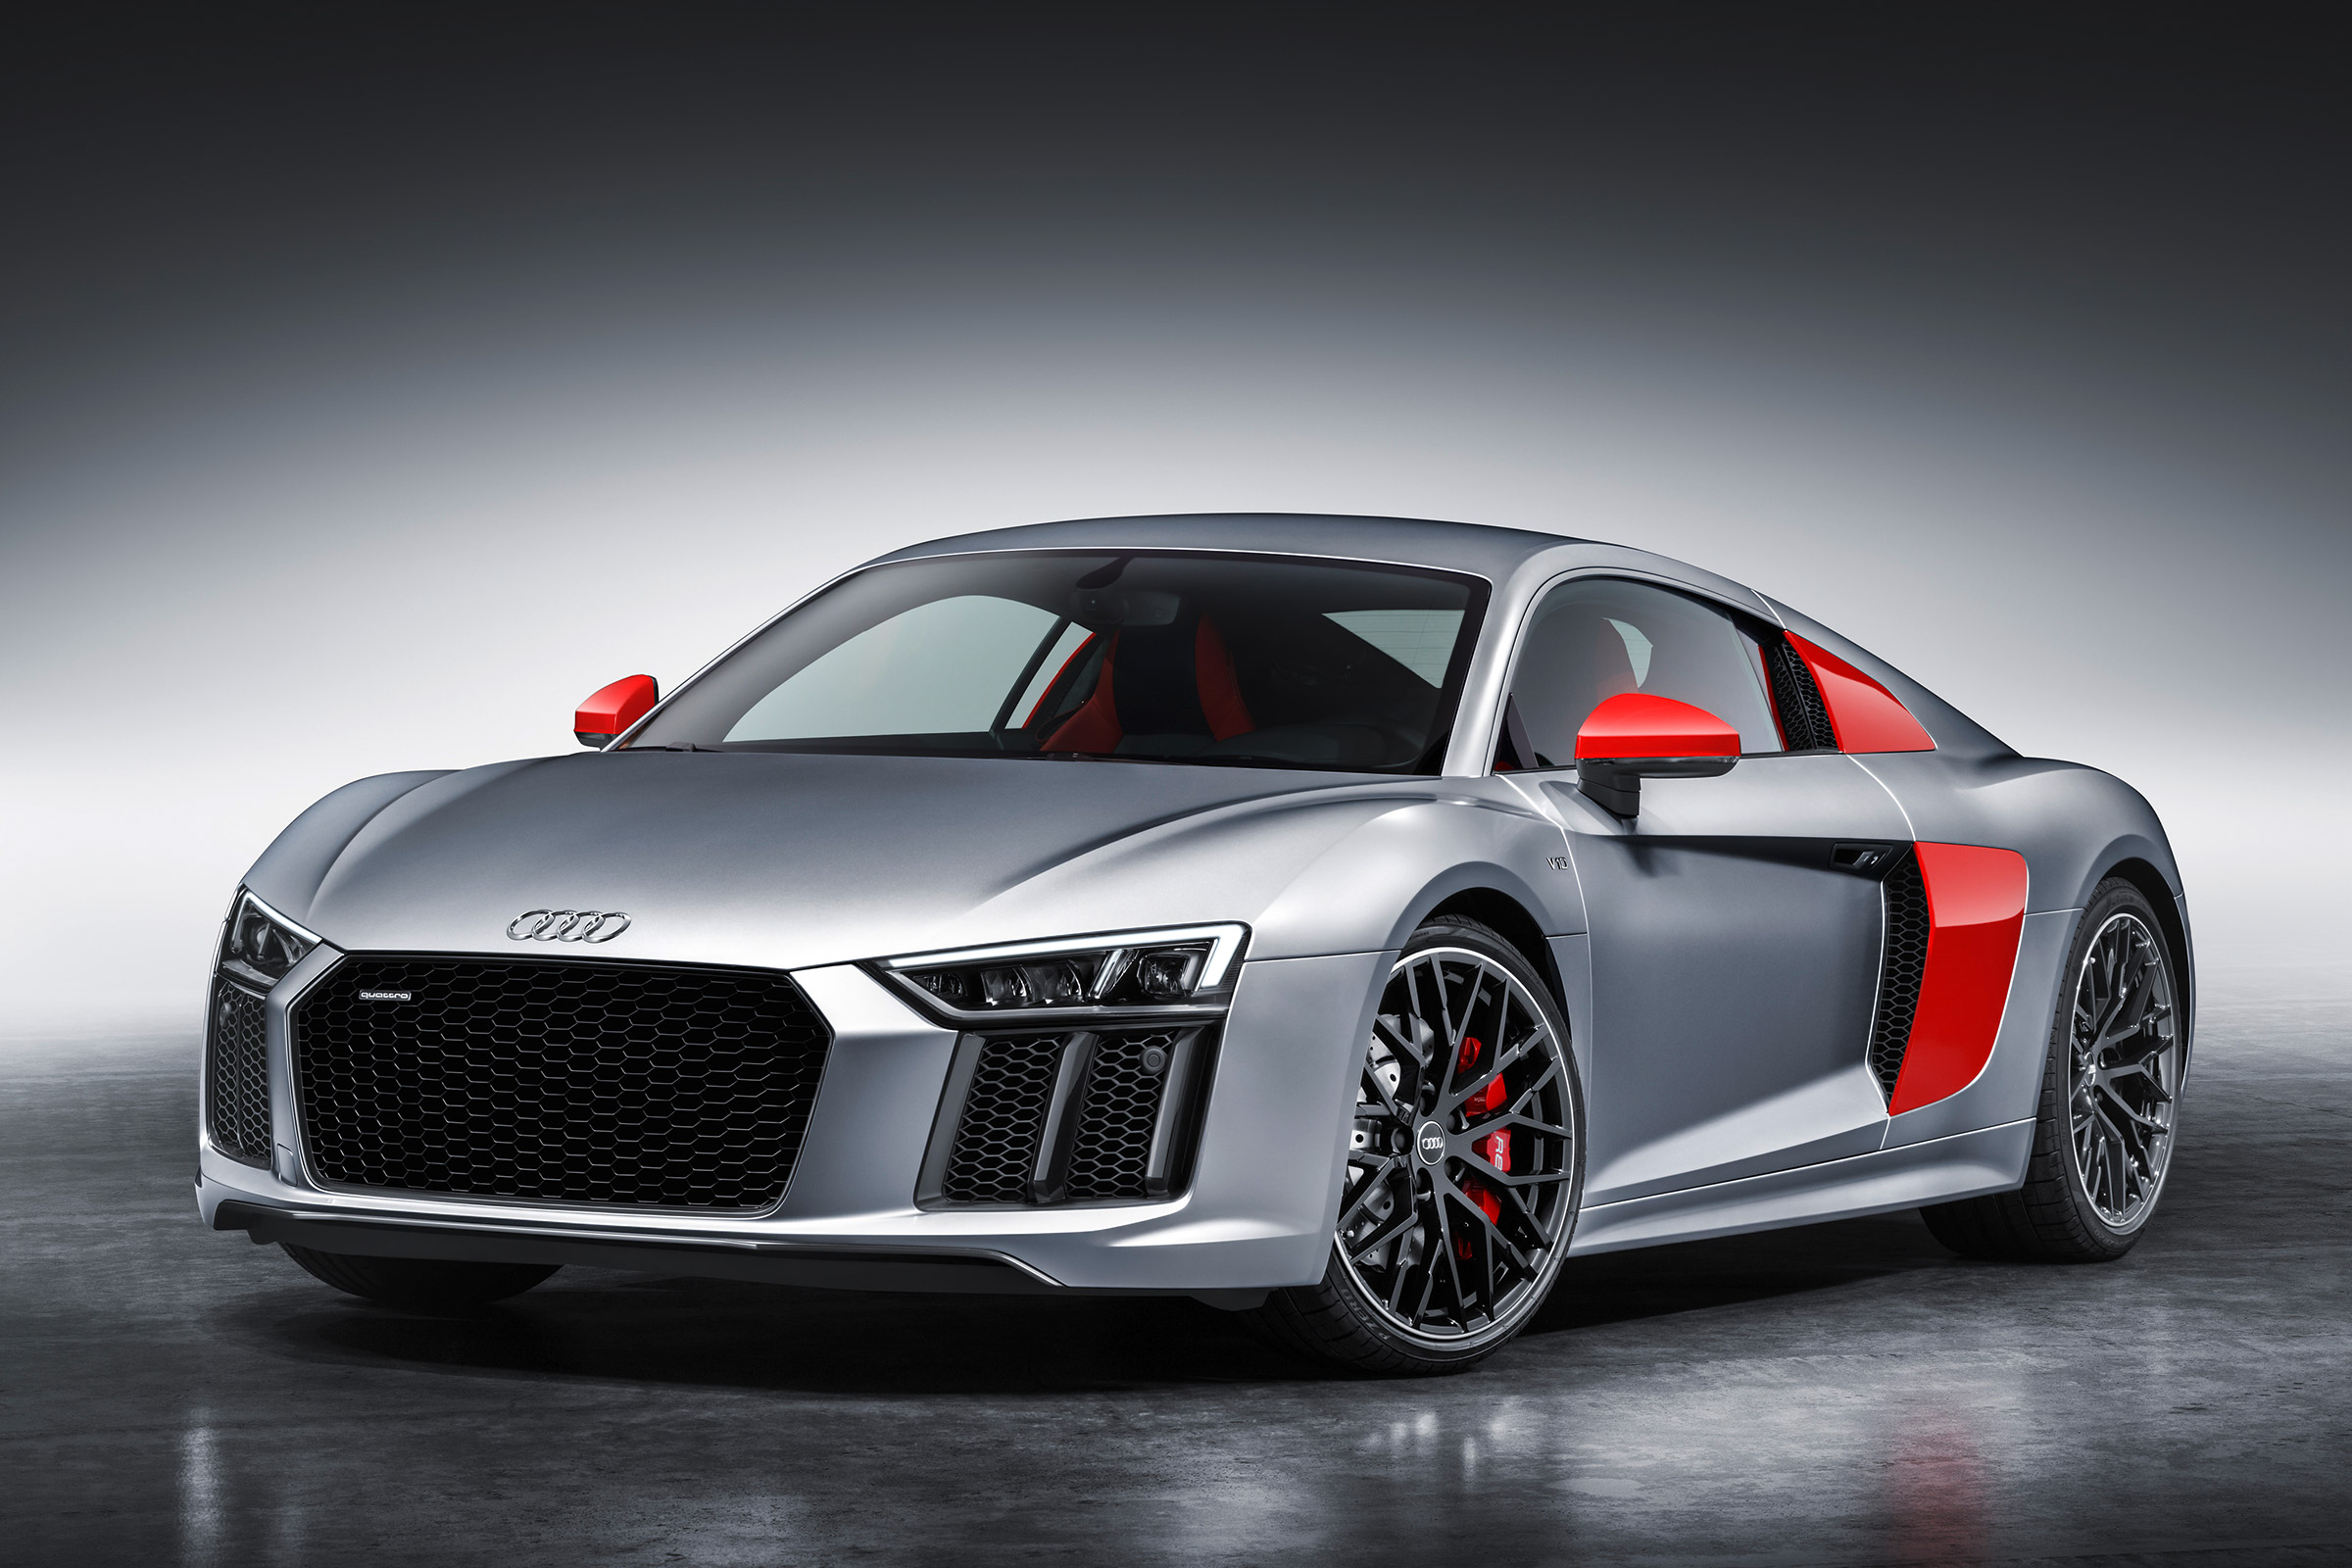 New Audi R8 Audi Sport Edition celebrates the brand's motorsport